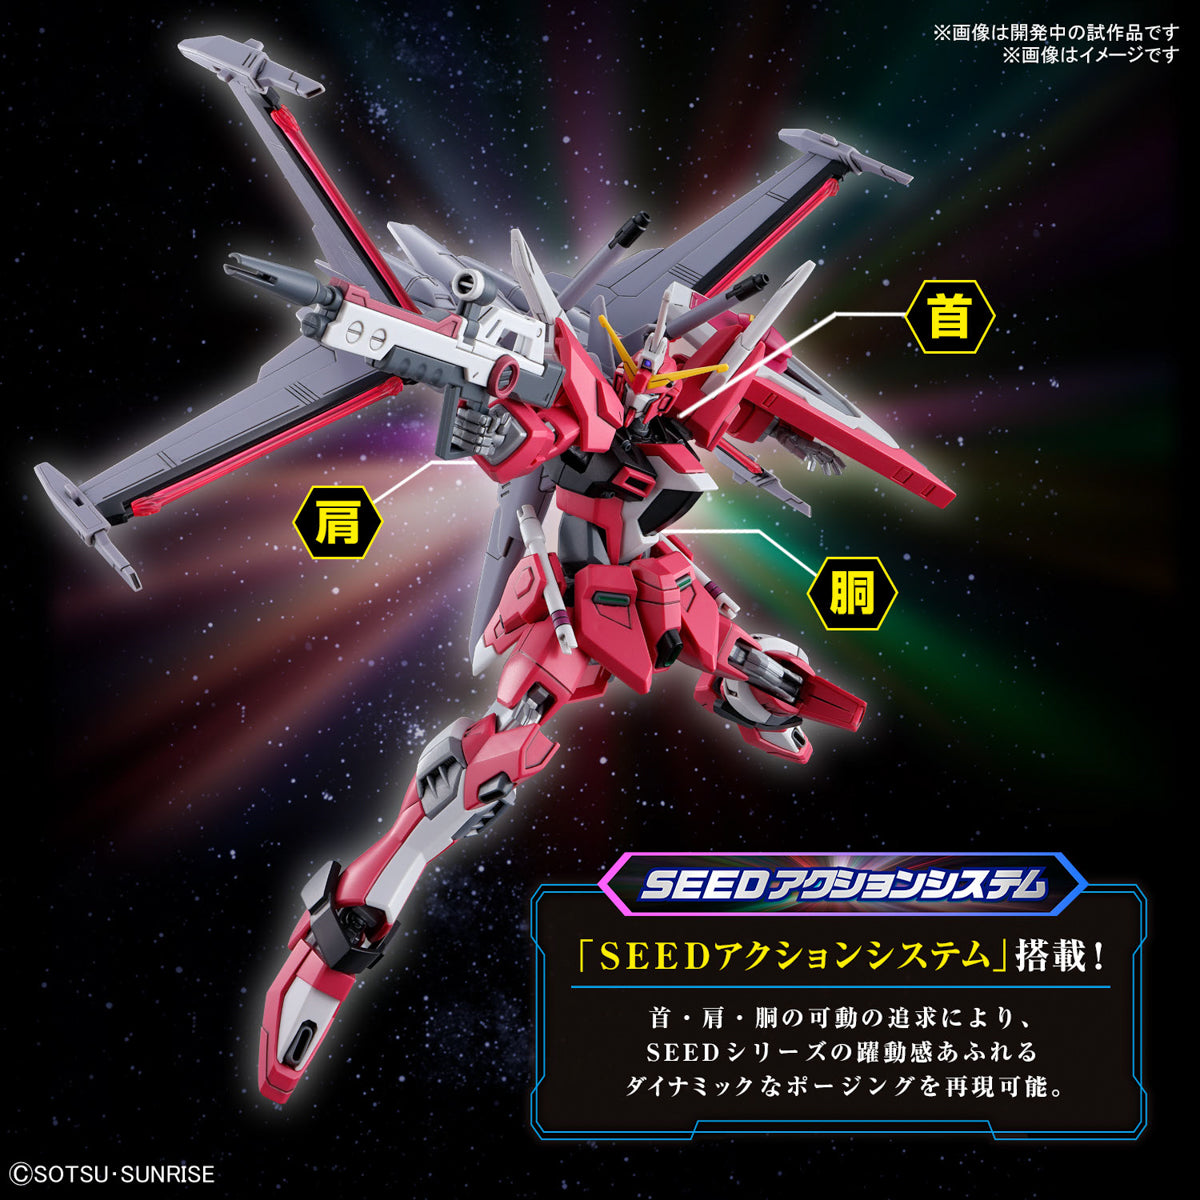 Bandai Gunpla High Grade HG Infinite Justice Gundam Spec II Plastic Model Toy VCA Singapore